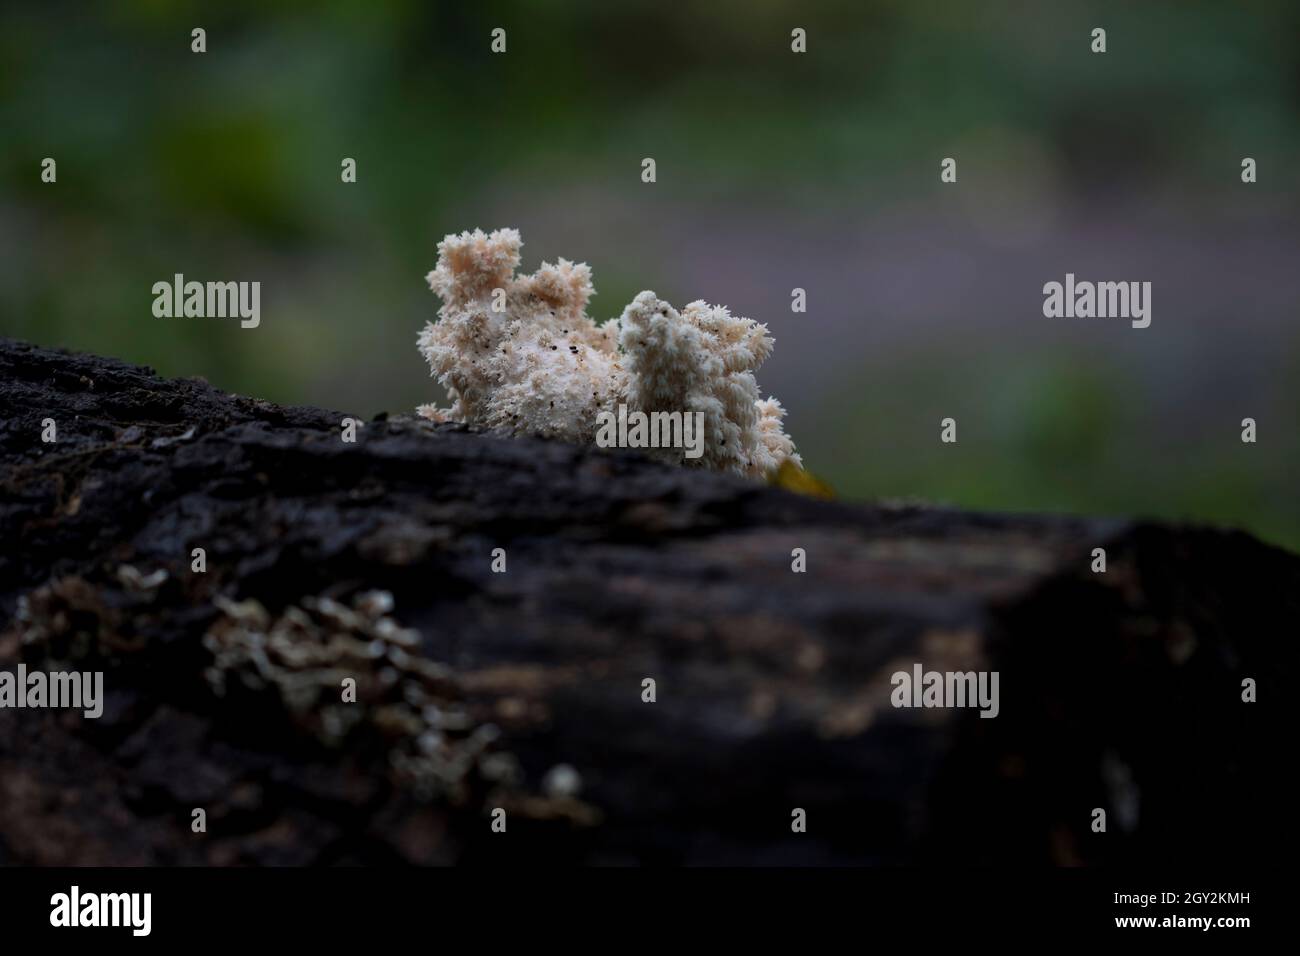 Coral mushrooms close up white fungus fruiting body on tree stump. Stock Photo